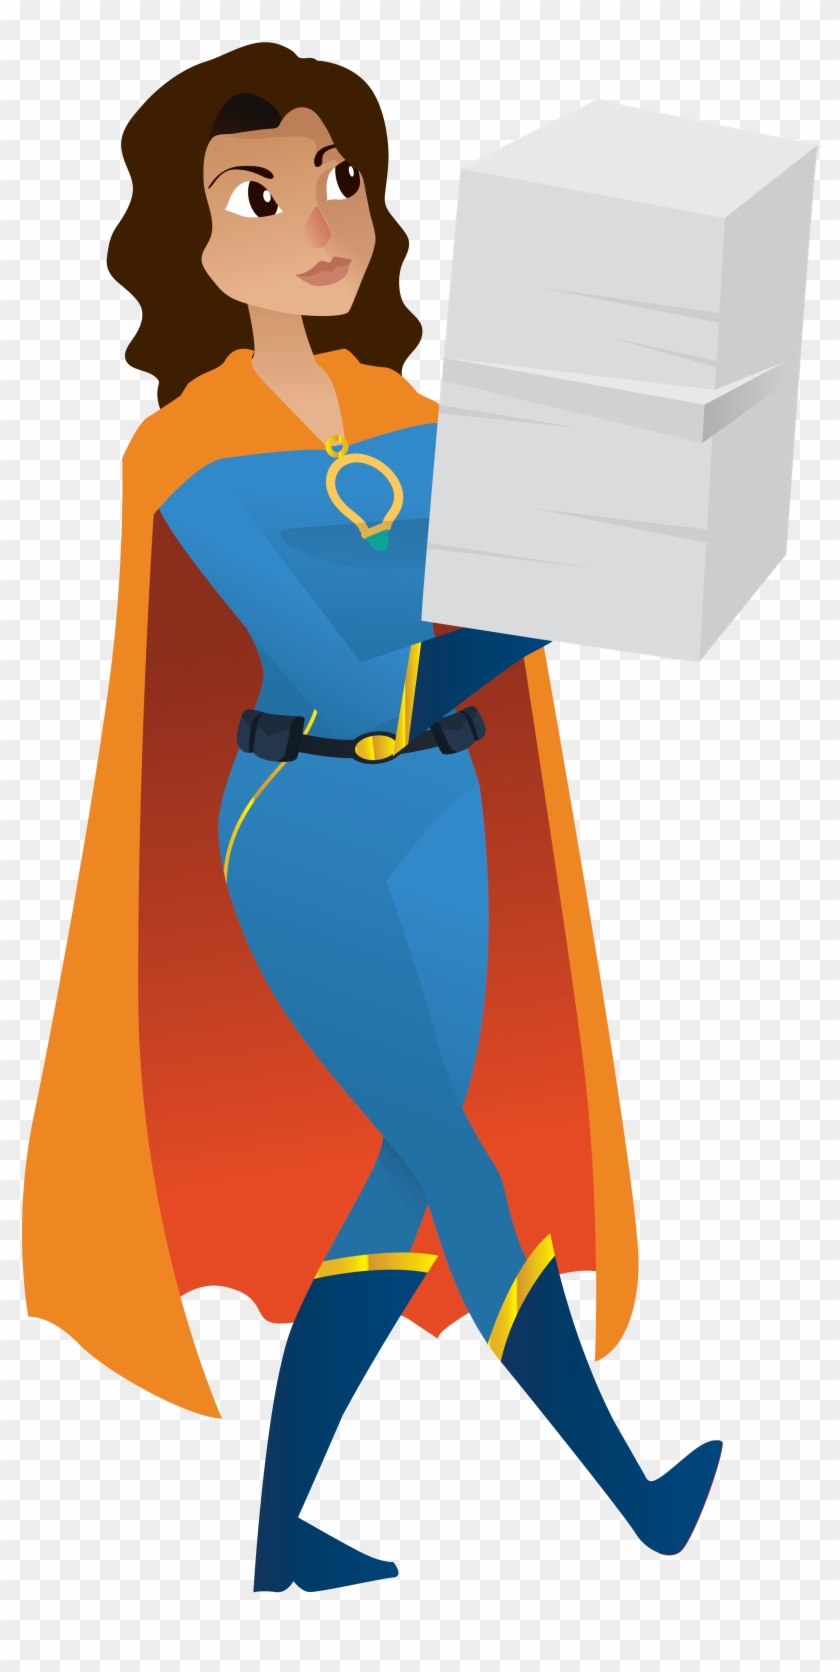 Clark Kent Power Girl Cartoon Superhero - Clark Kent Power Girl Cartoon Superhero #806319